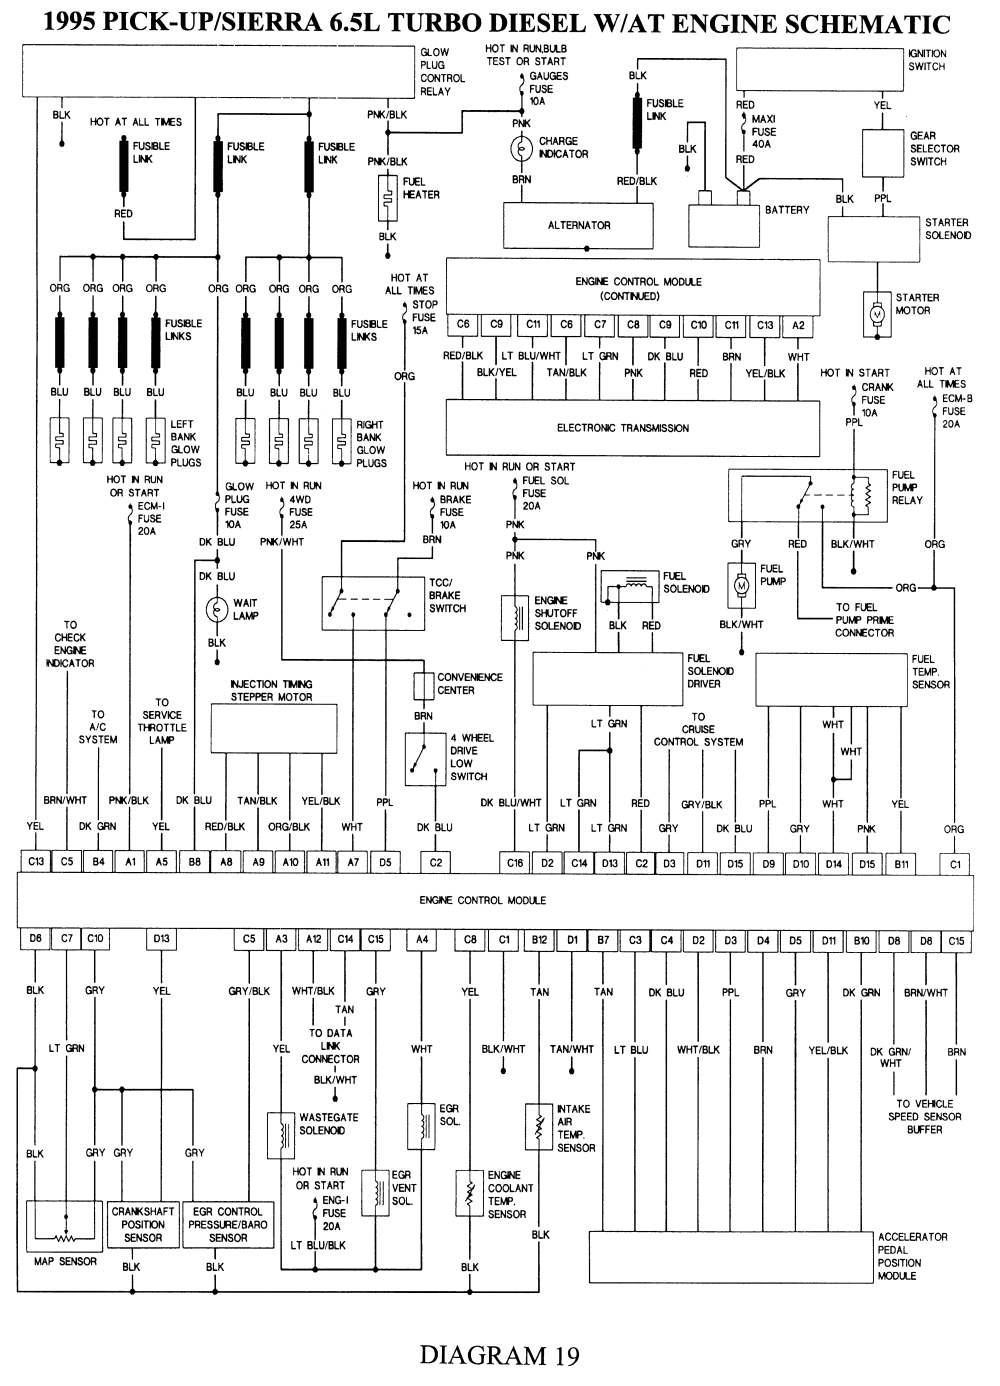 repair guides wiring diagrams wiring diagrams autozone com 1995 chevrolet wiring diagrams